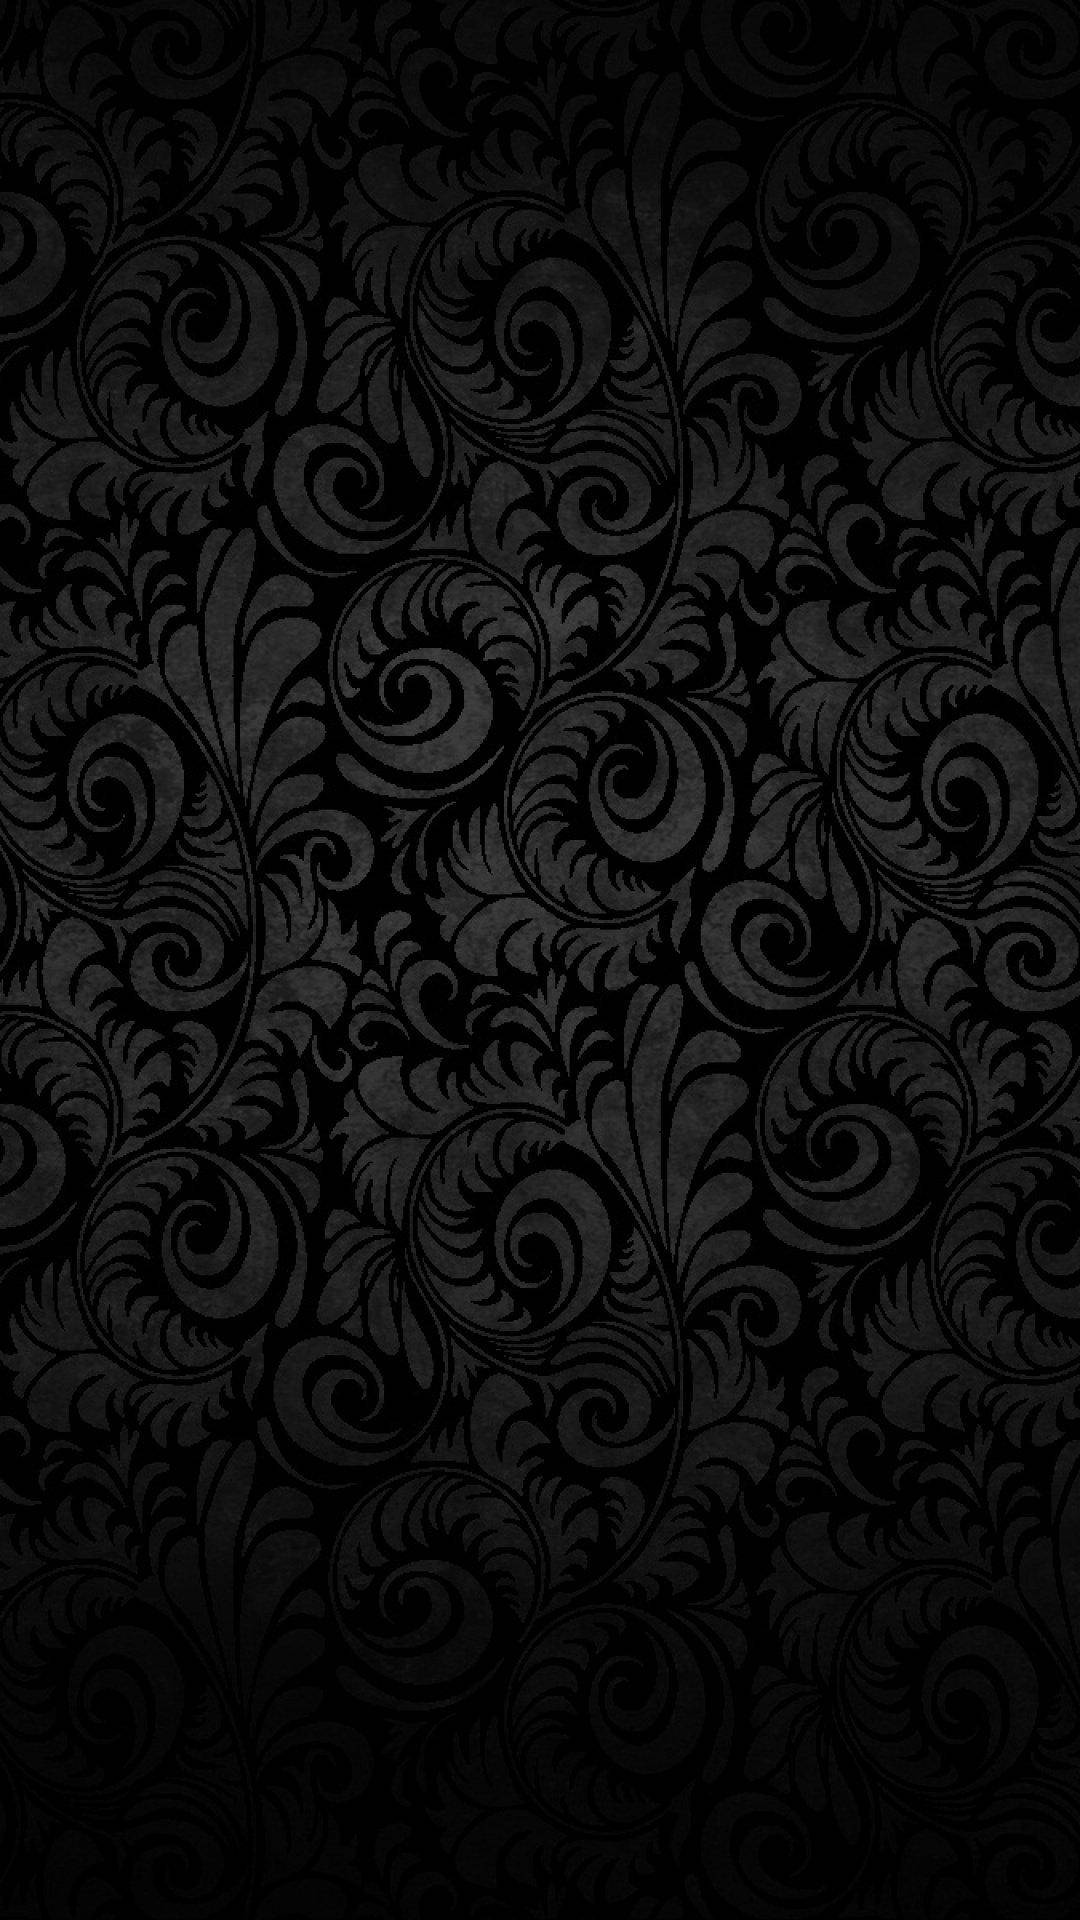 Plain Black With Ornate Leaf Pattern Wallpaper